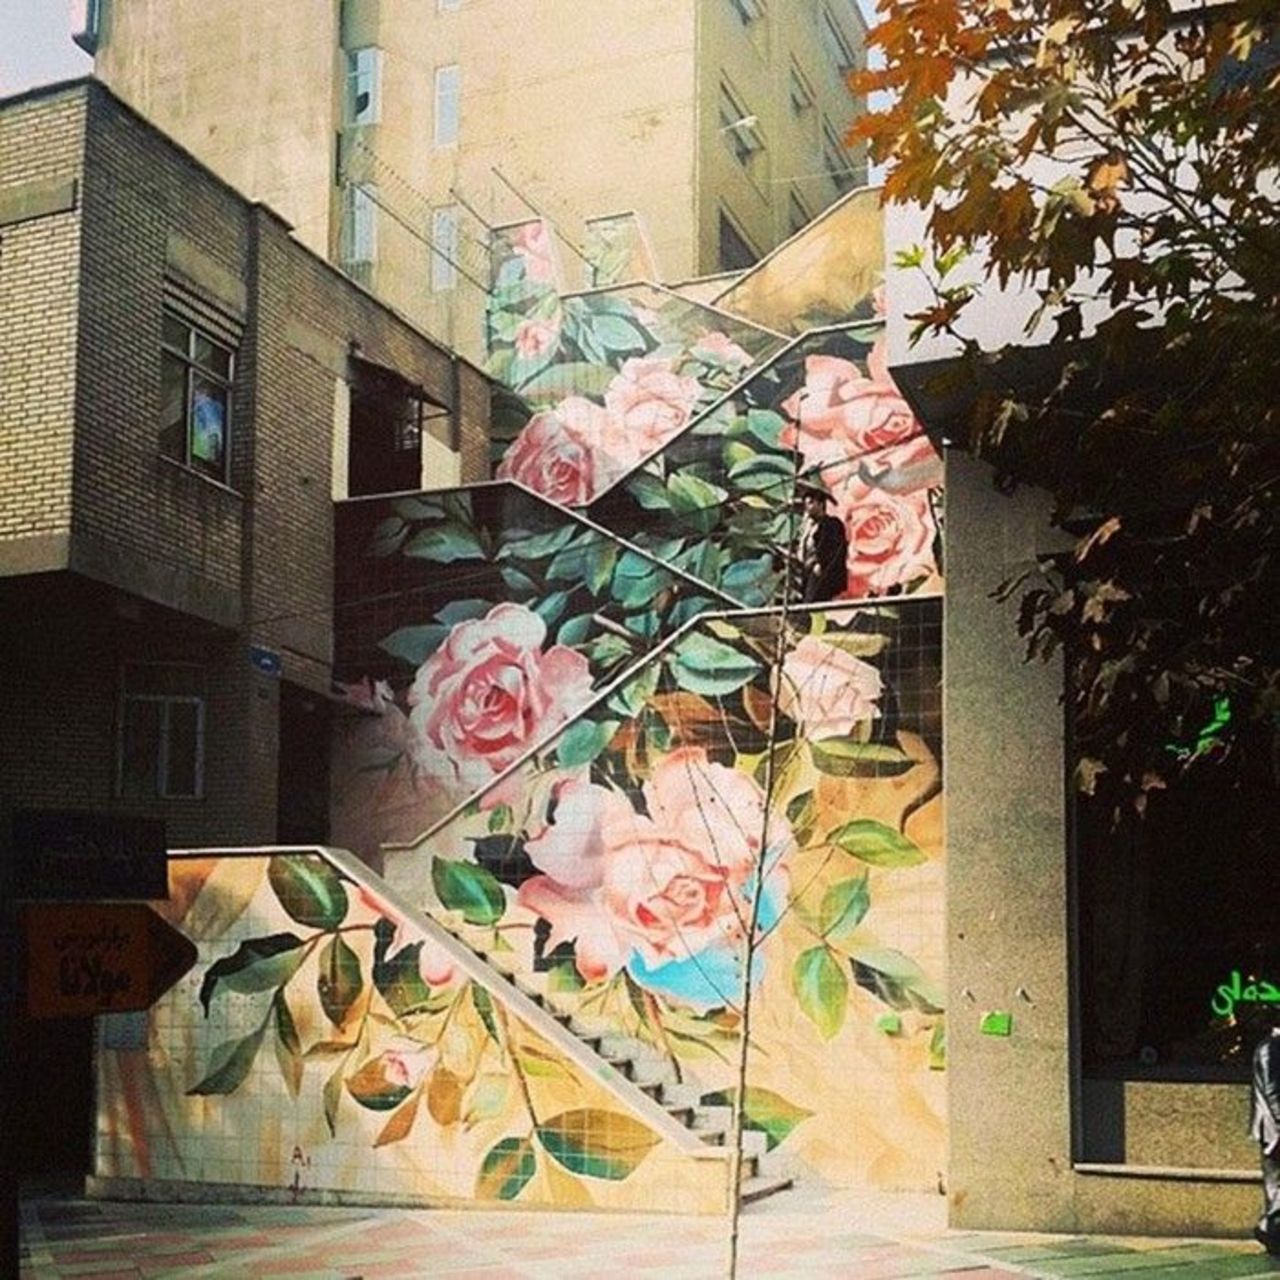 RT @5putnik1: The Streets are what we make it...  •  #streetart #graffiti #art #flowers #funky #dope . : https://t.co/mtkjSauXHx